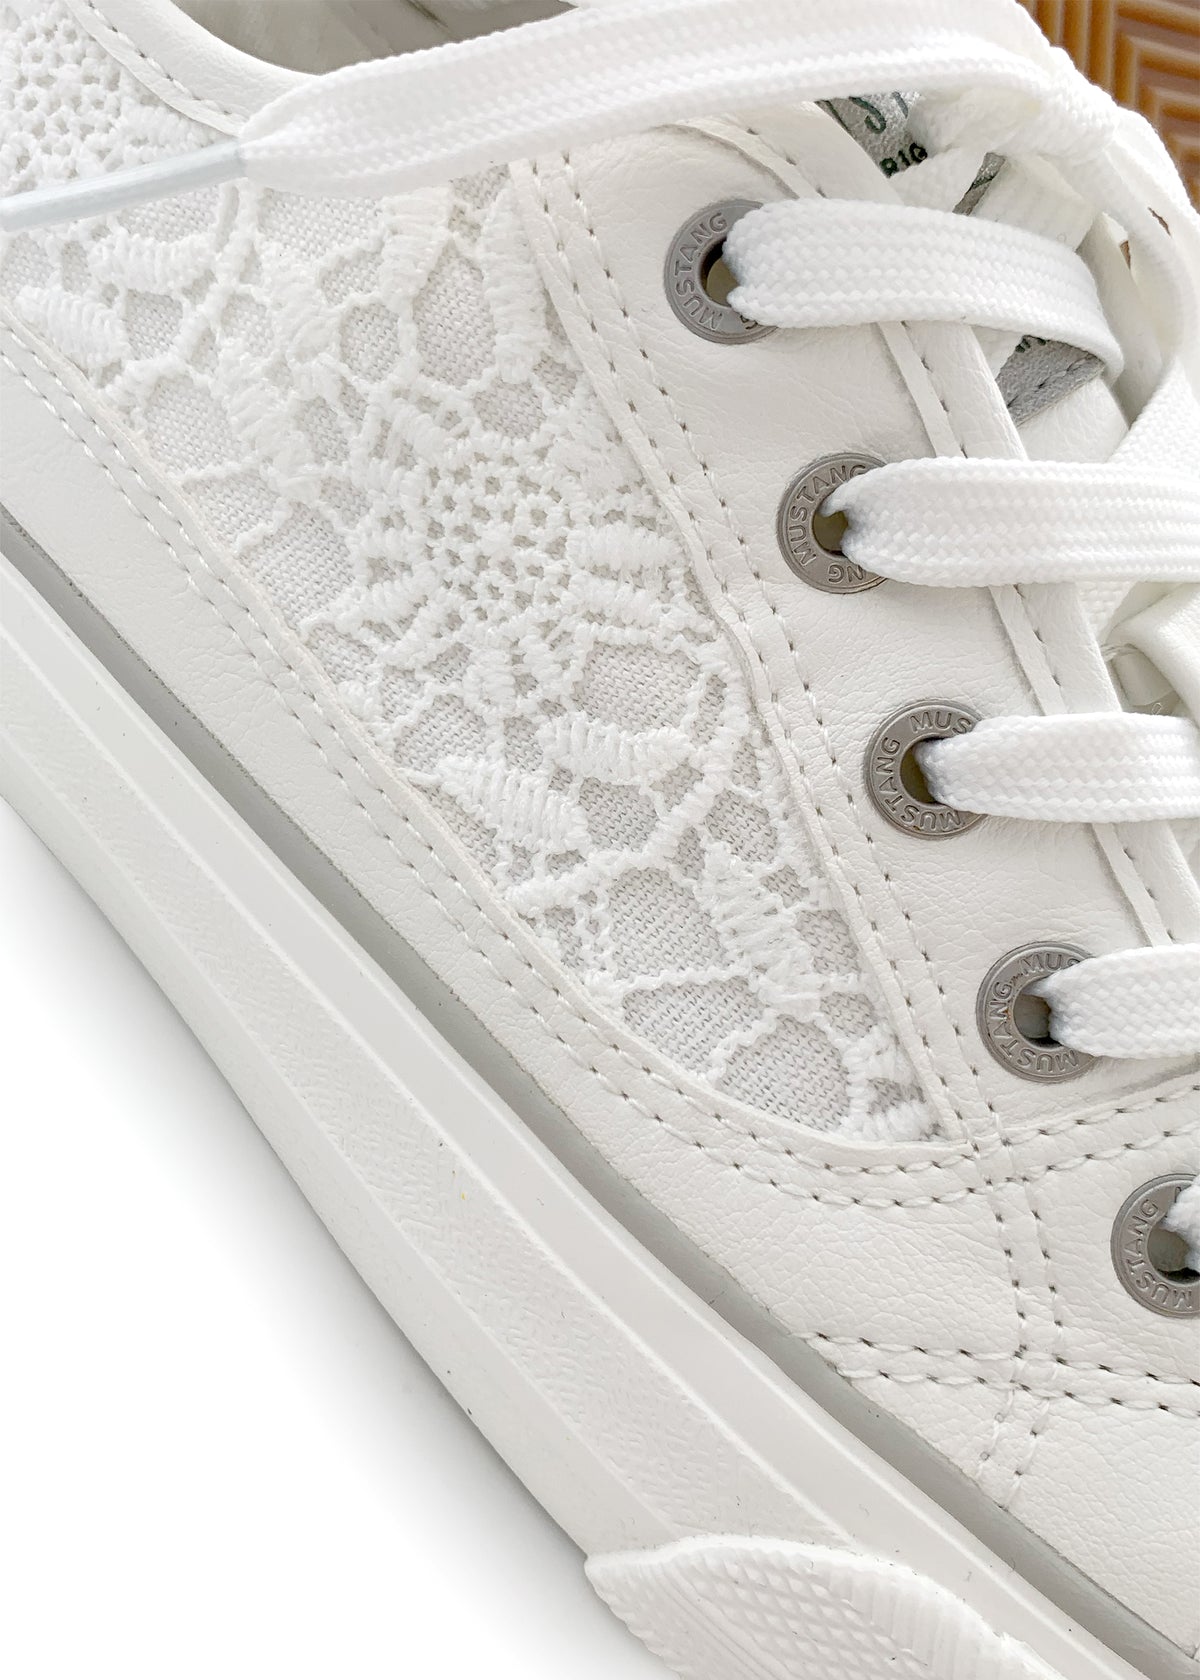 Lace sneakers - white, vegan